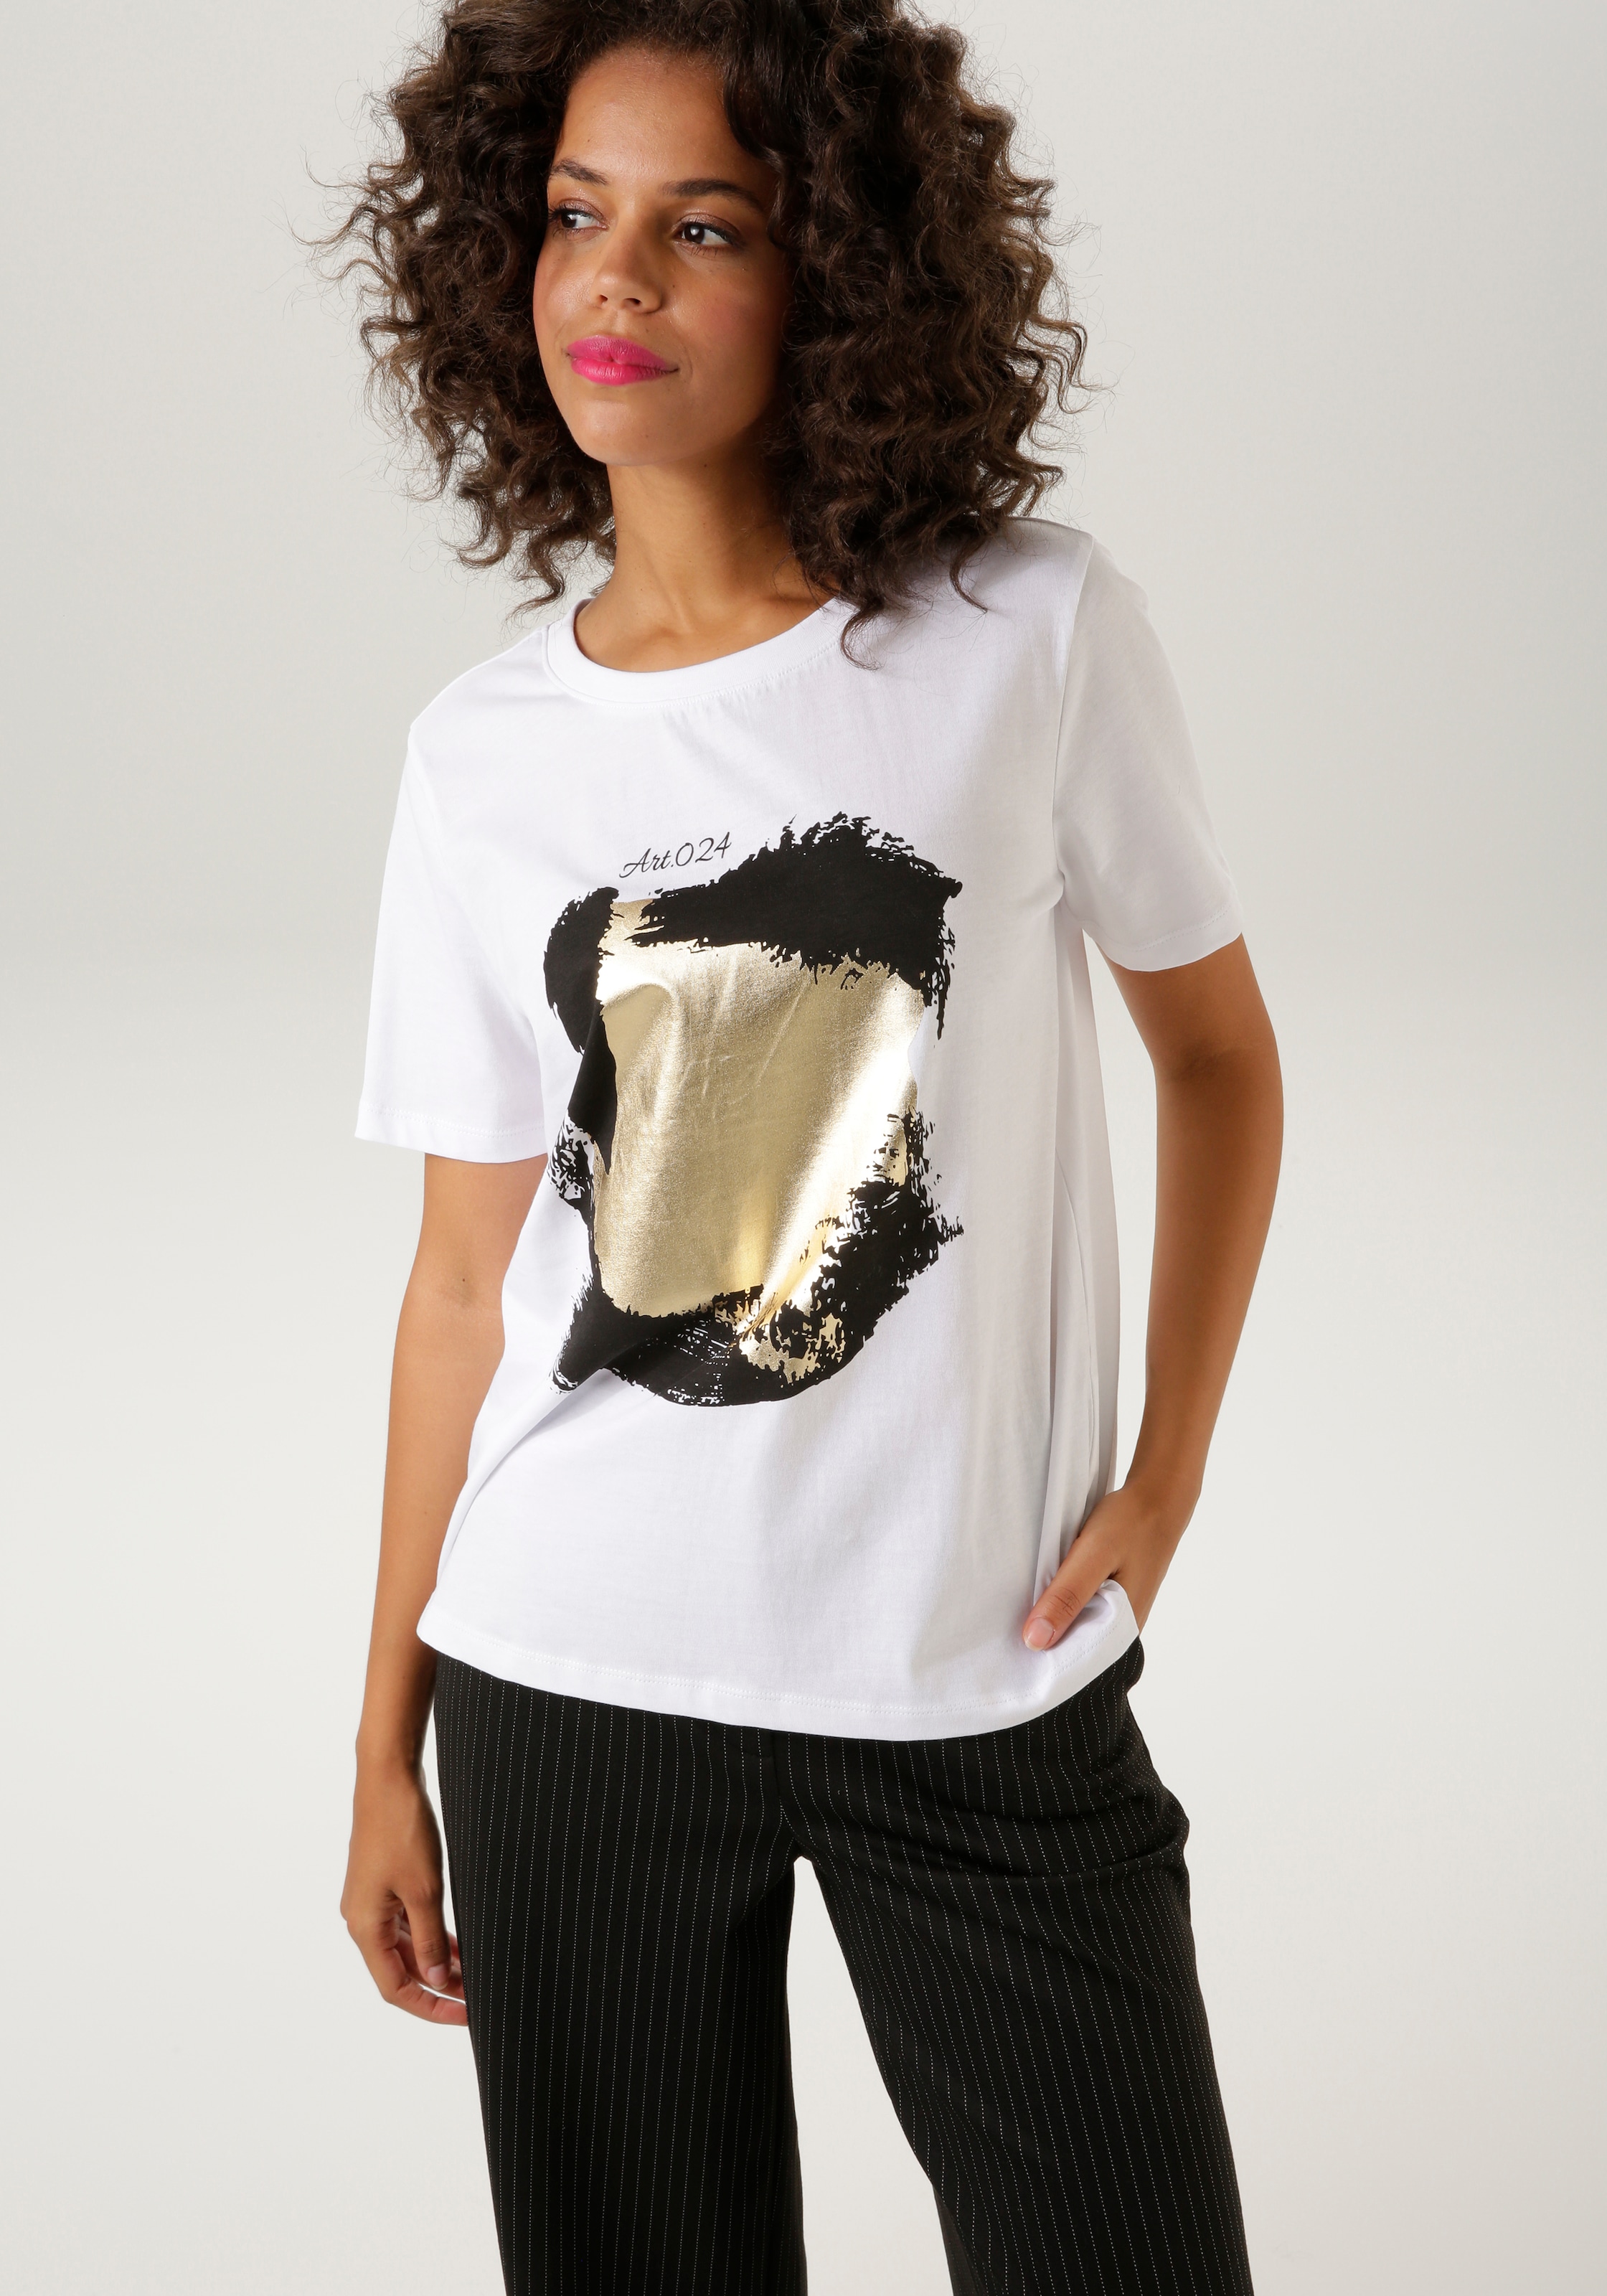 CASUAL Foliendruck mit Aniston BAUR NEUE Frontprint | verzierter KOLLEKTION bestellen - goldfarbenem T-Shirt,